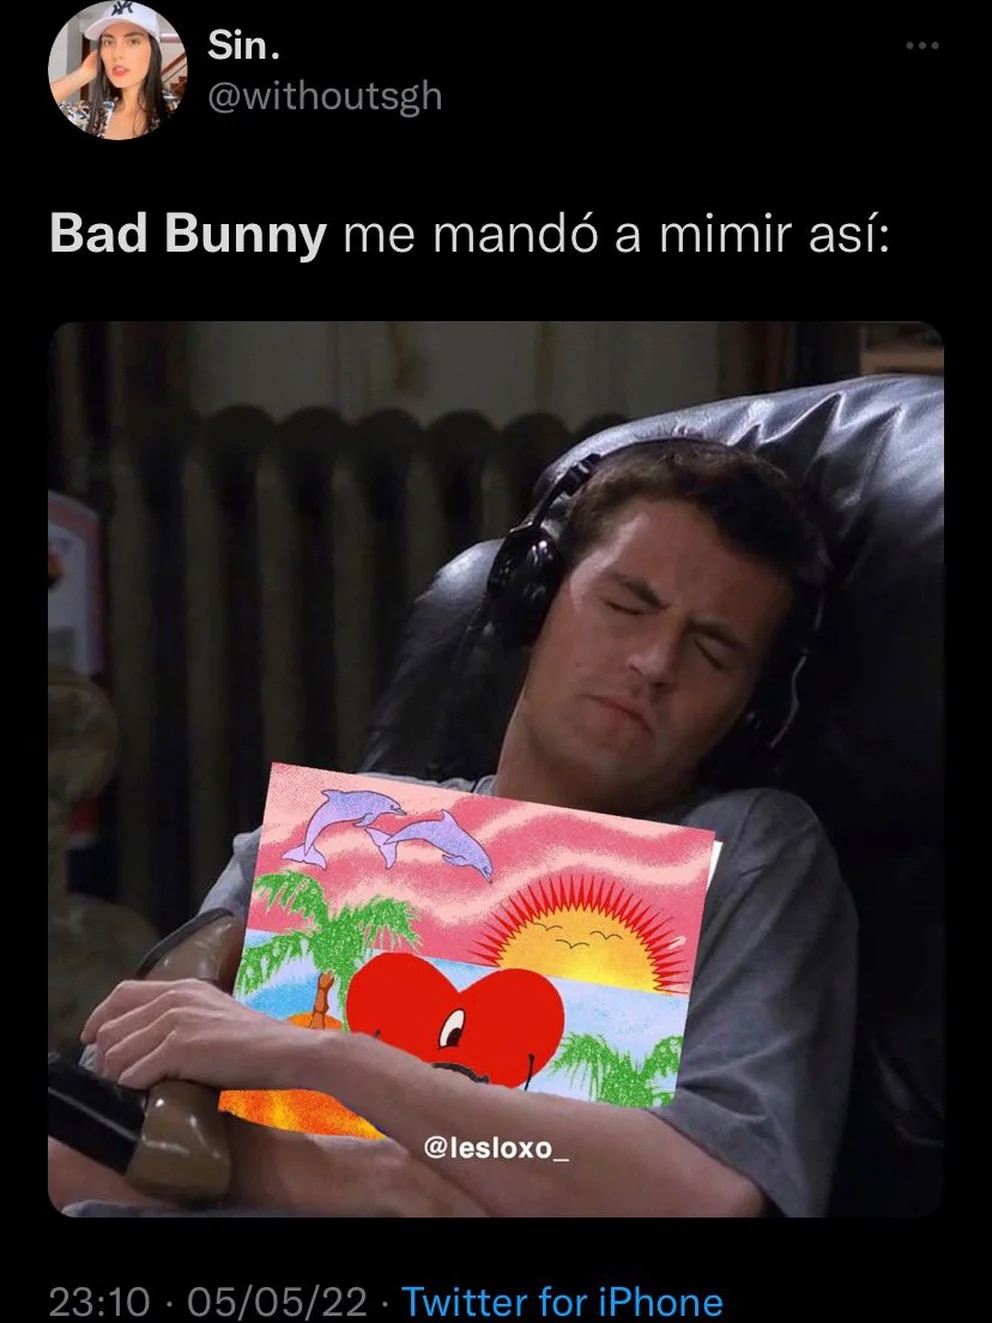 verano Bad Bunny